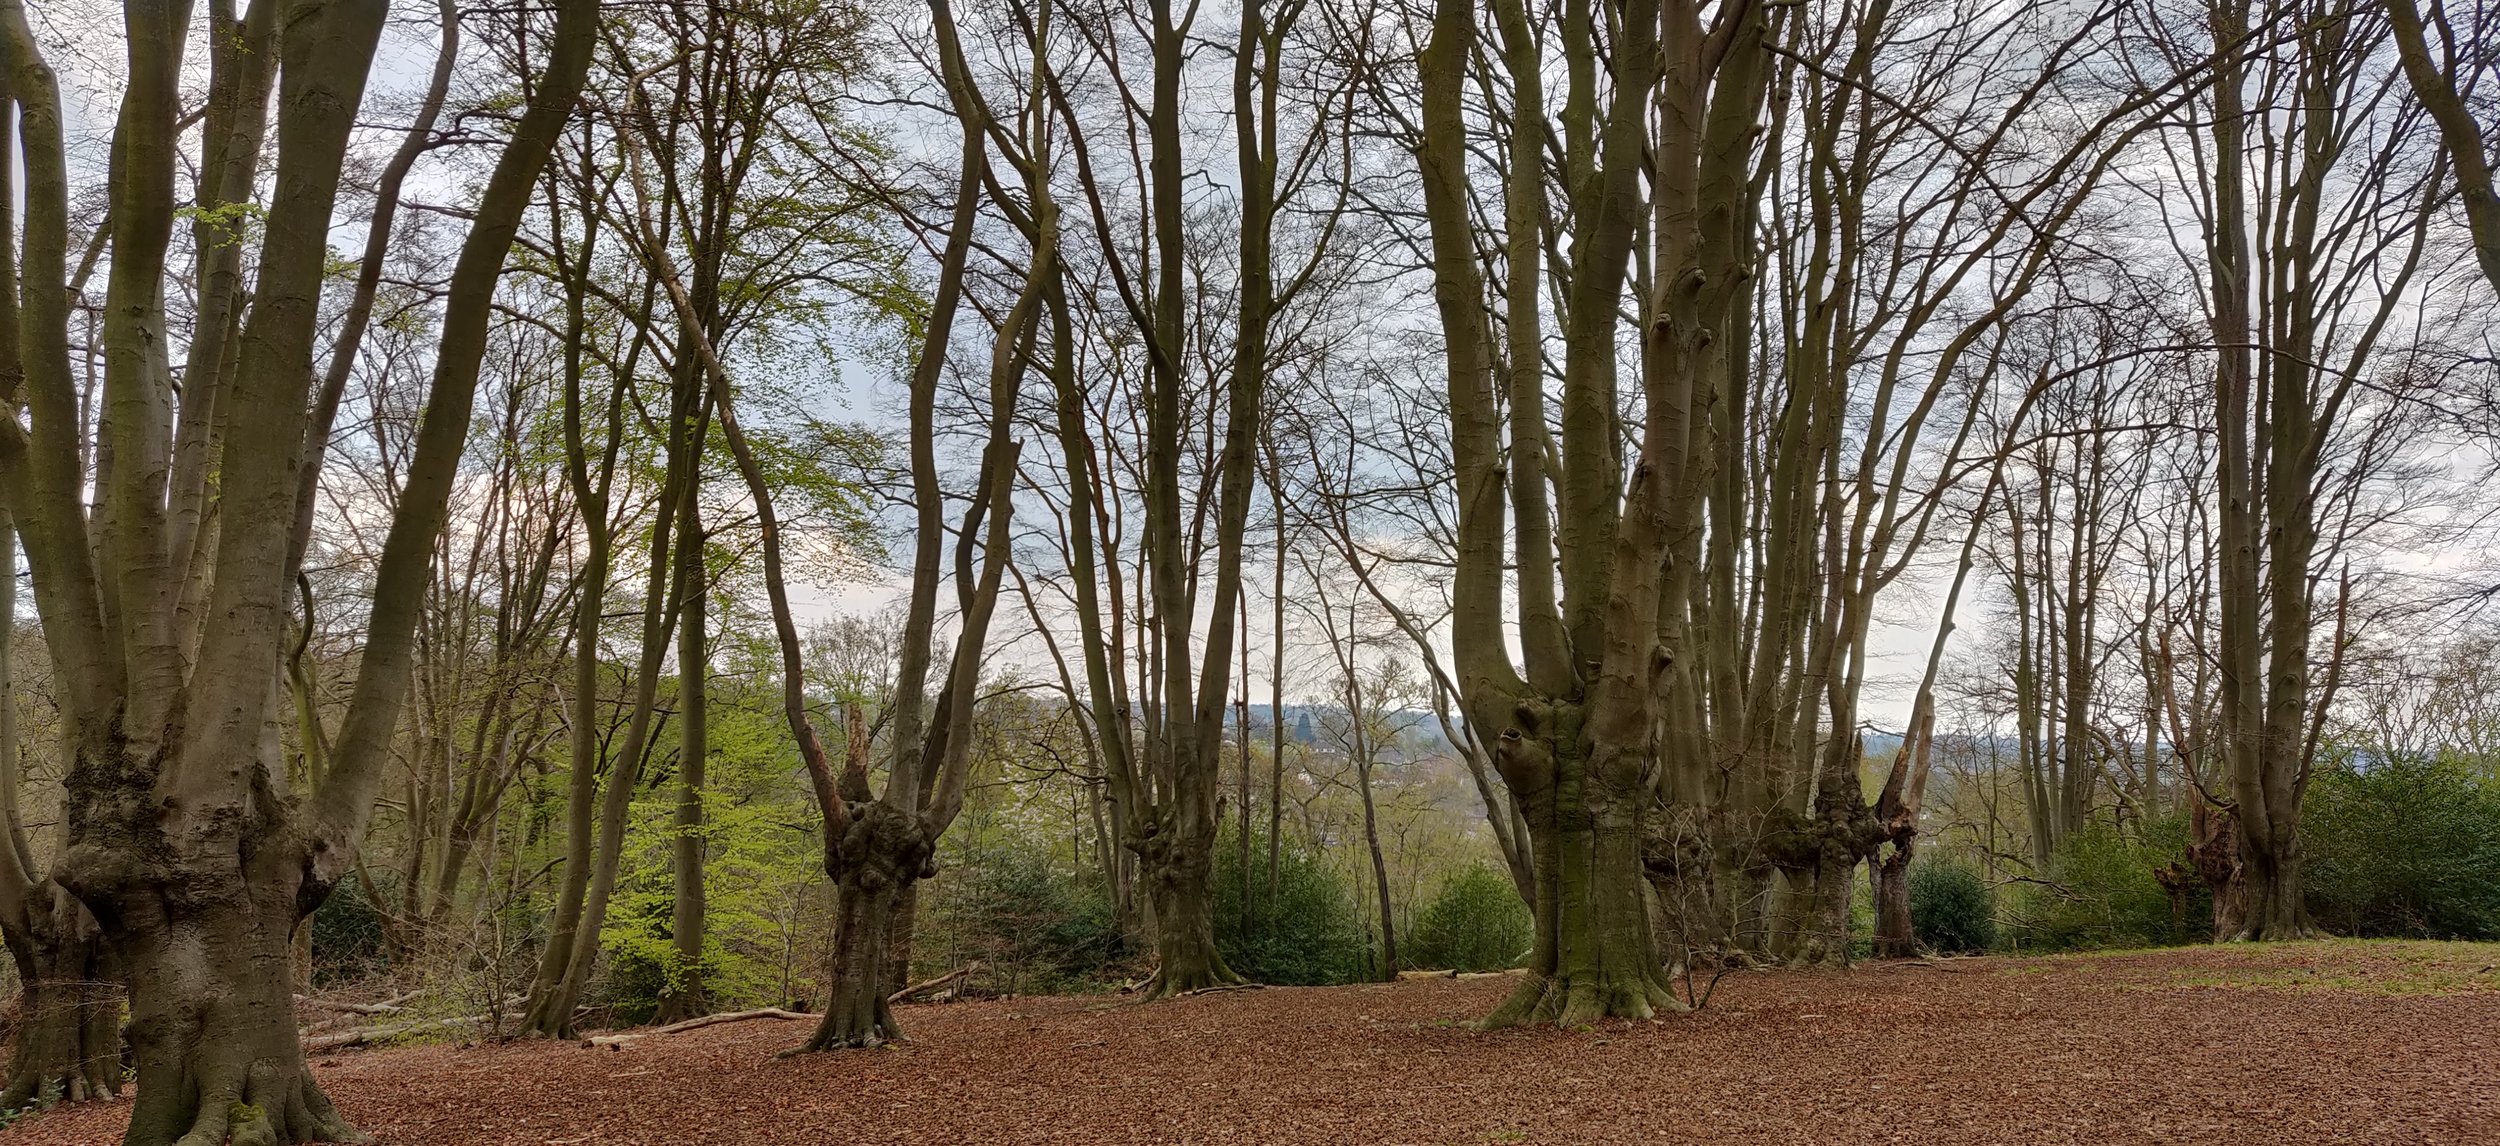 Pollarded trees, Staples Hill, Loughton 2019